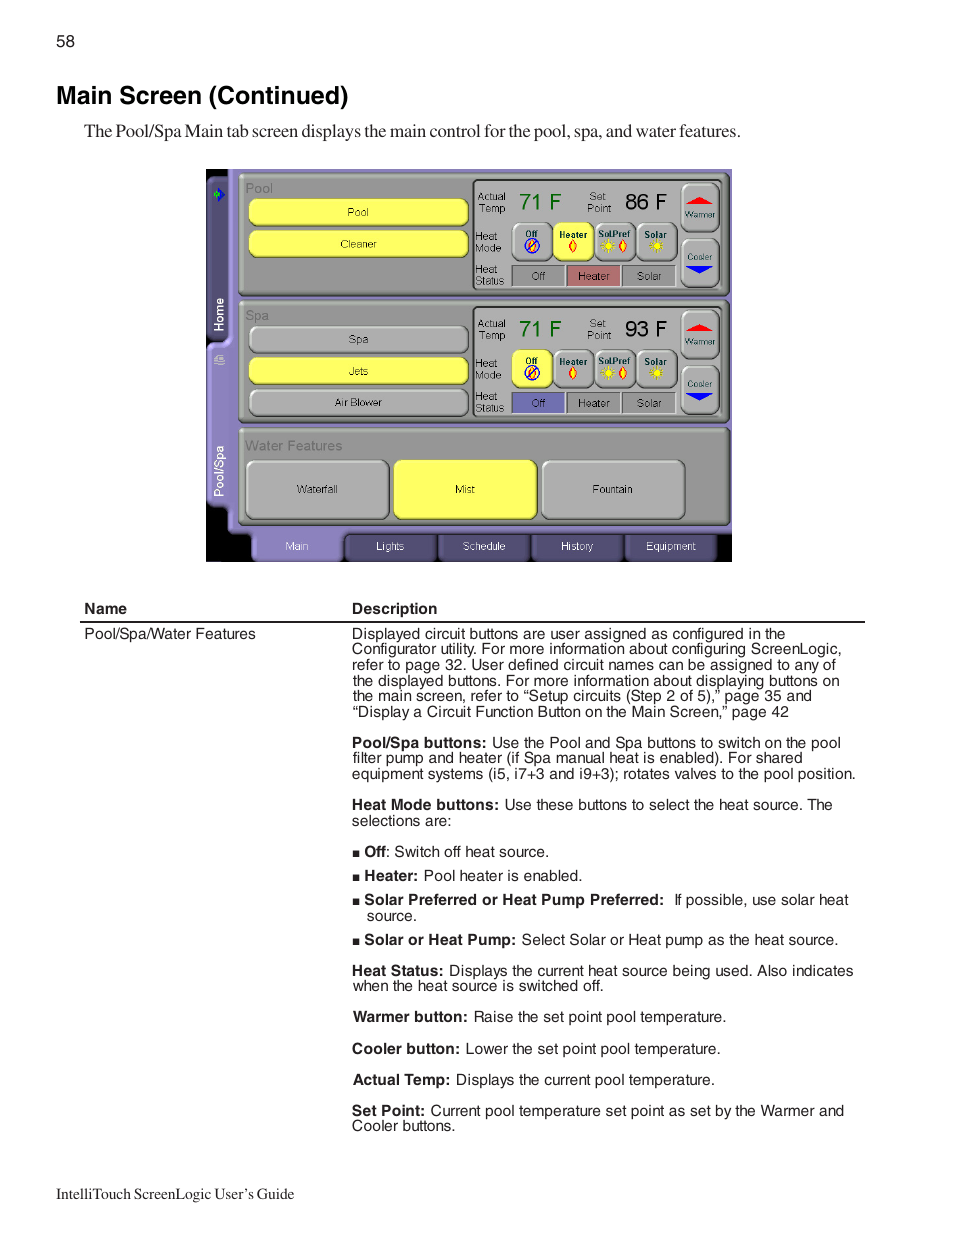 Main screen (continued) | Pentair Intellitouch ScreenLogic User Manual